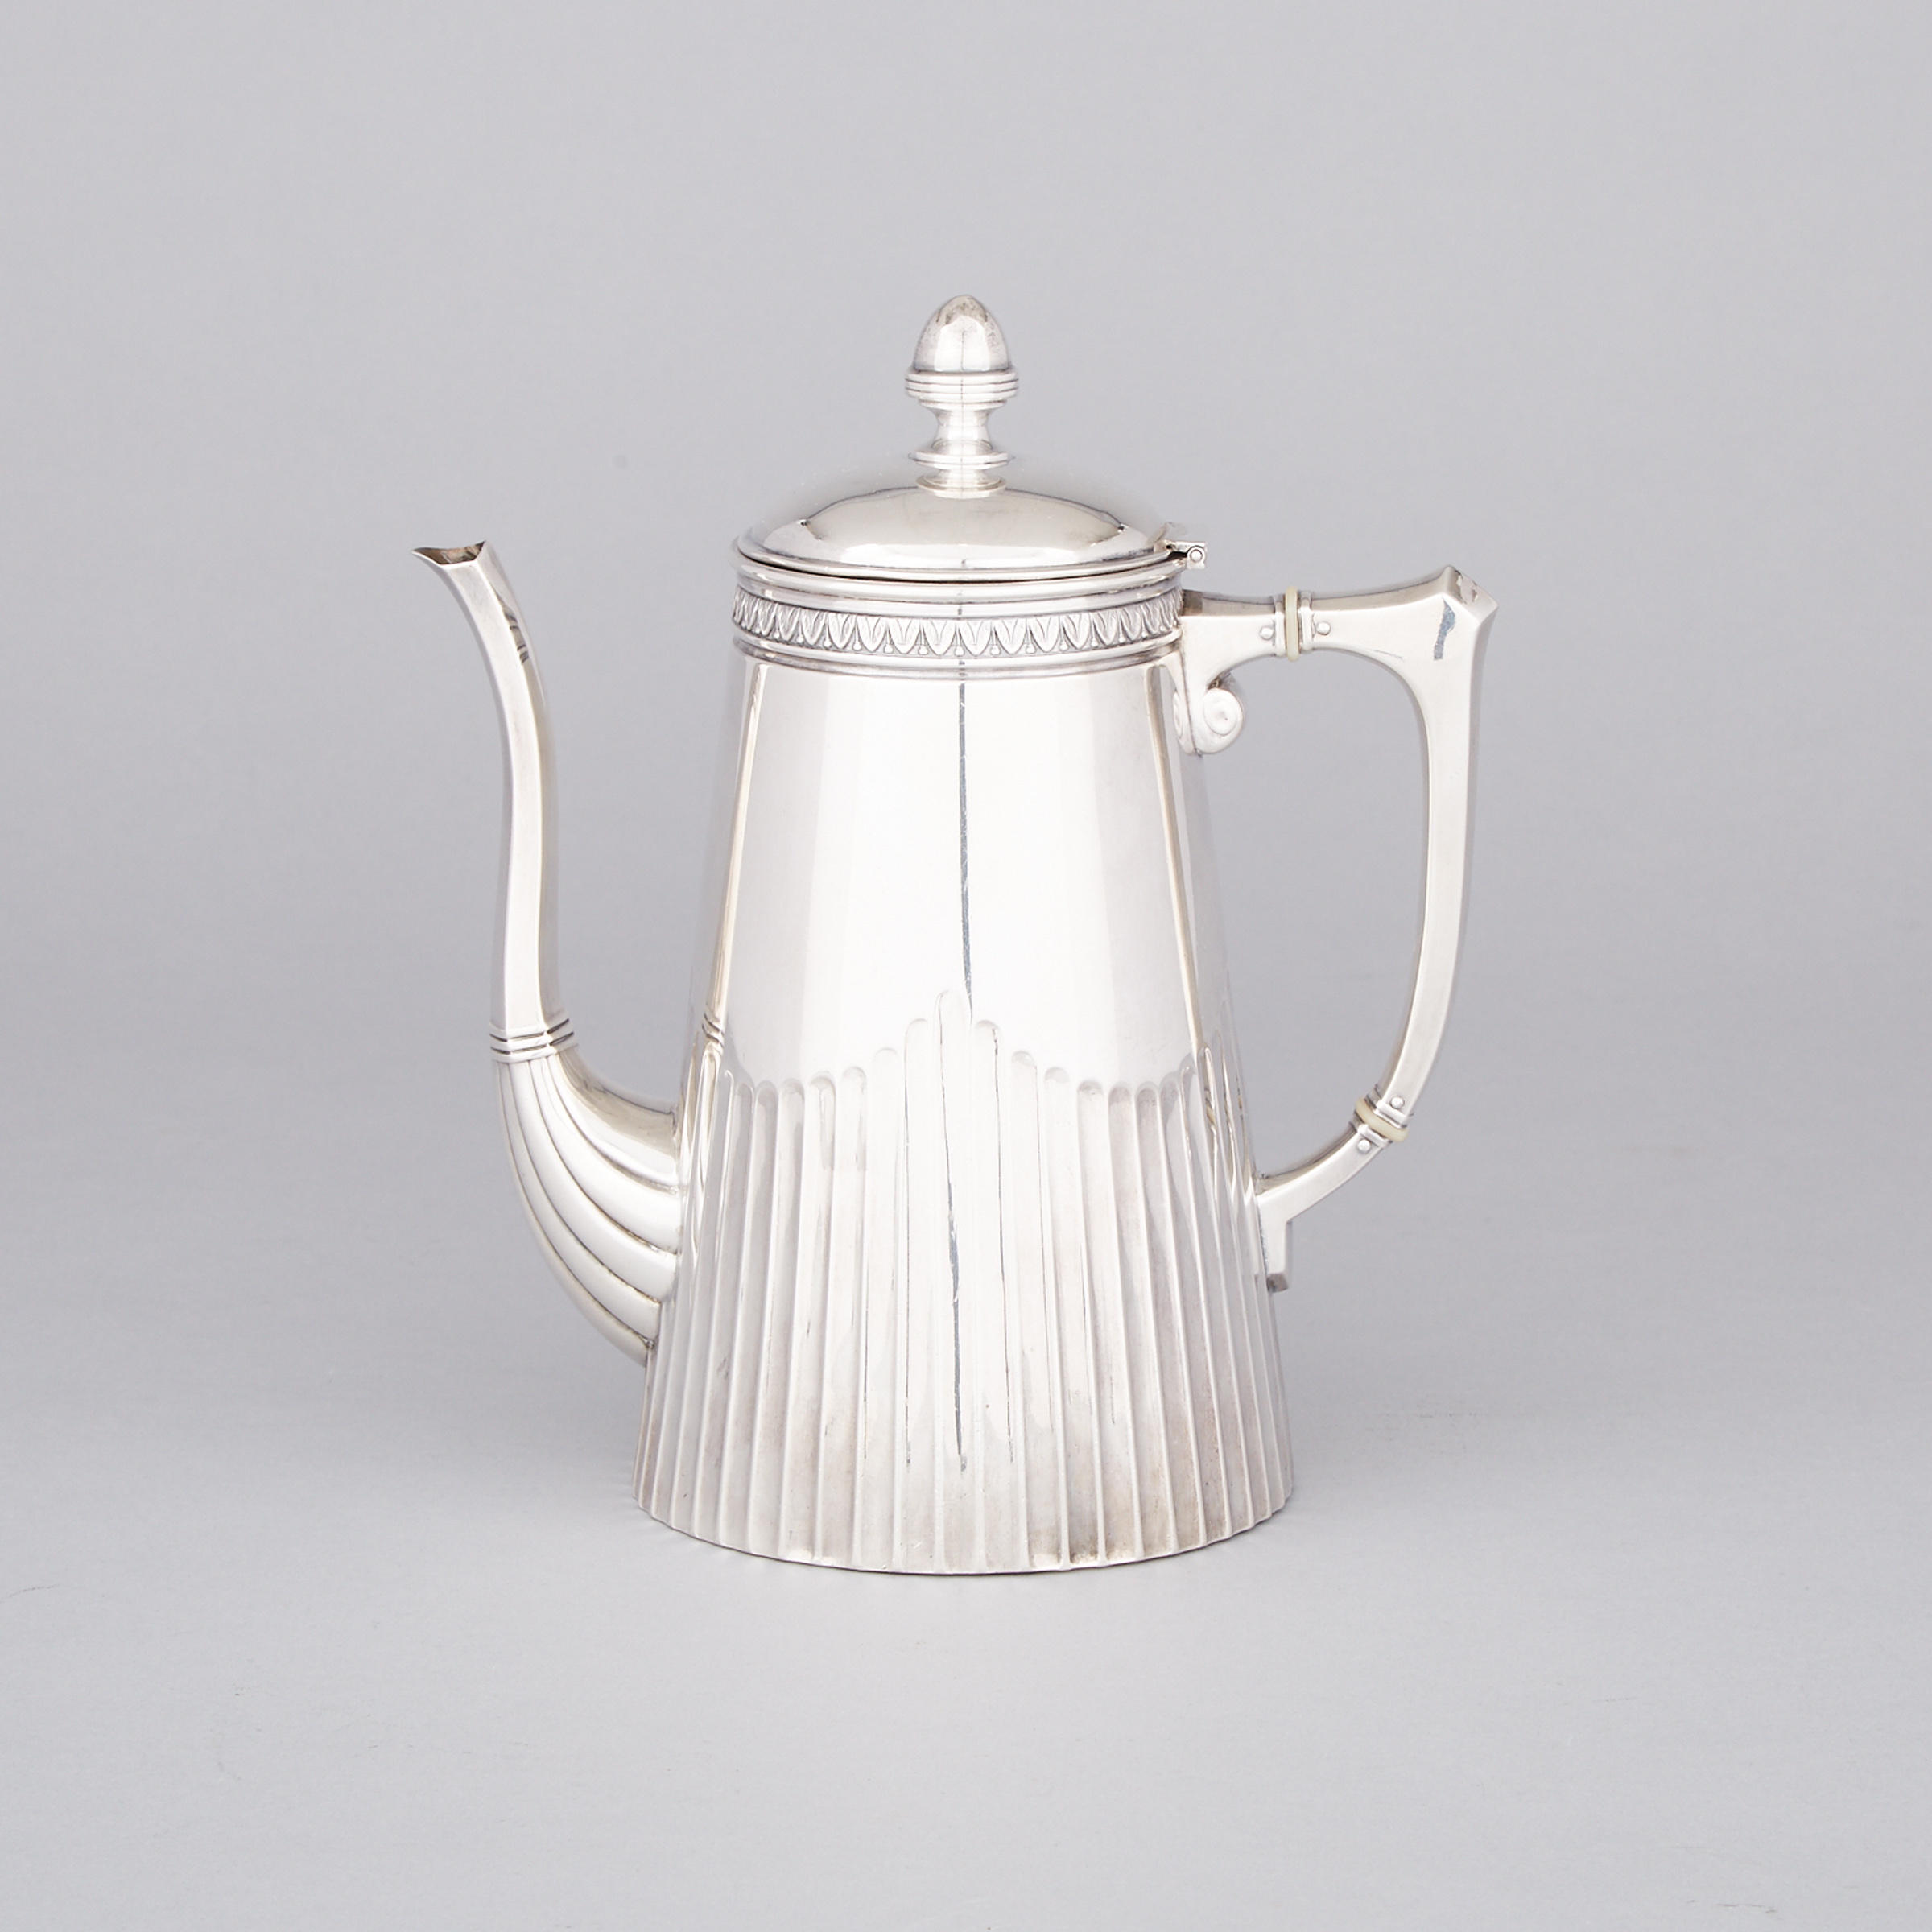 German Silver Coffee Pot, early 20th century